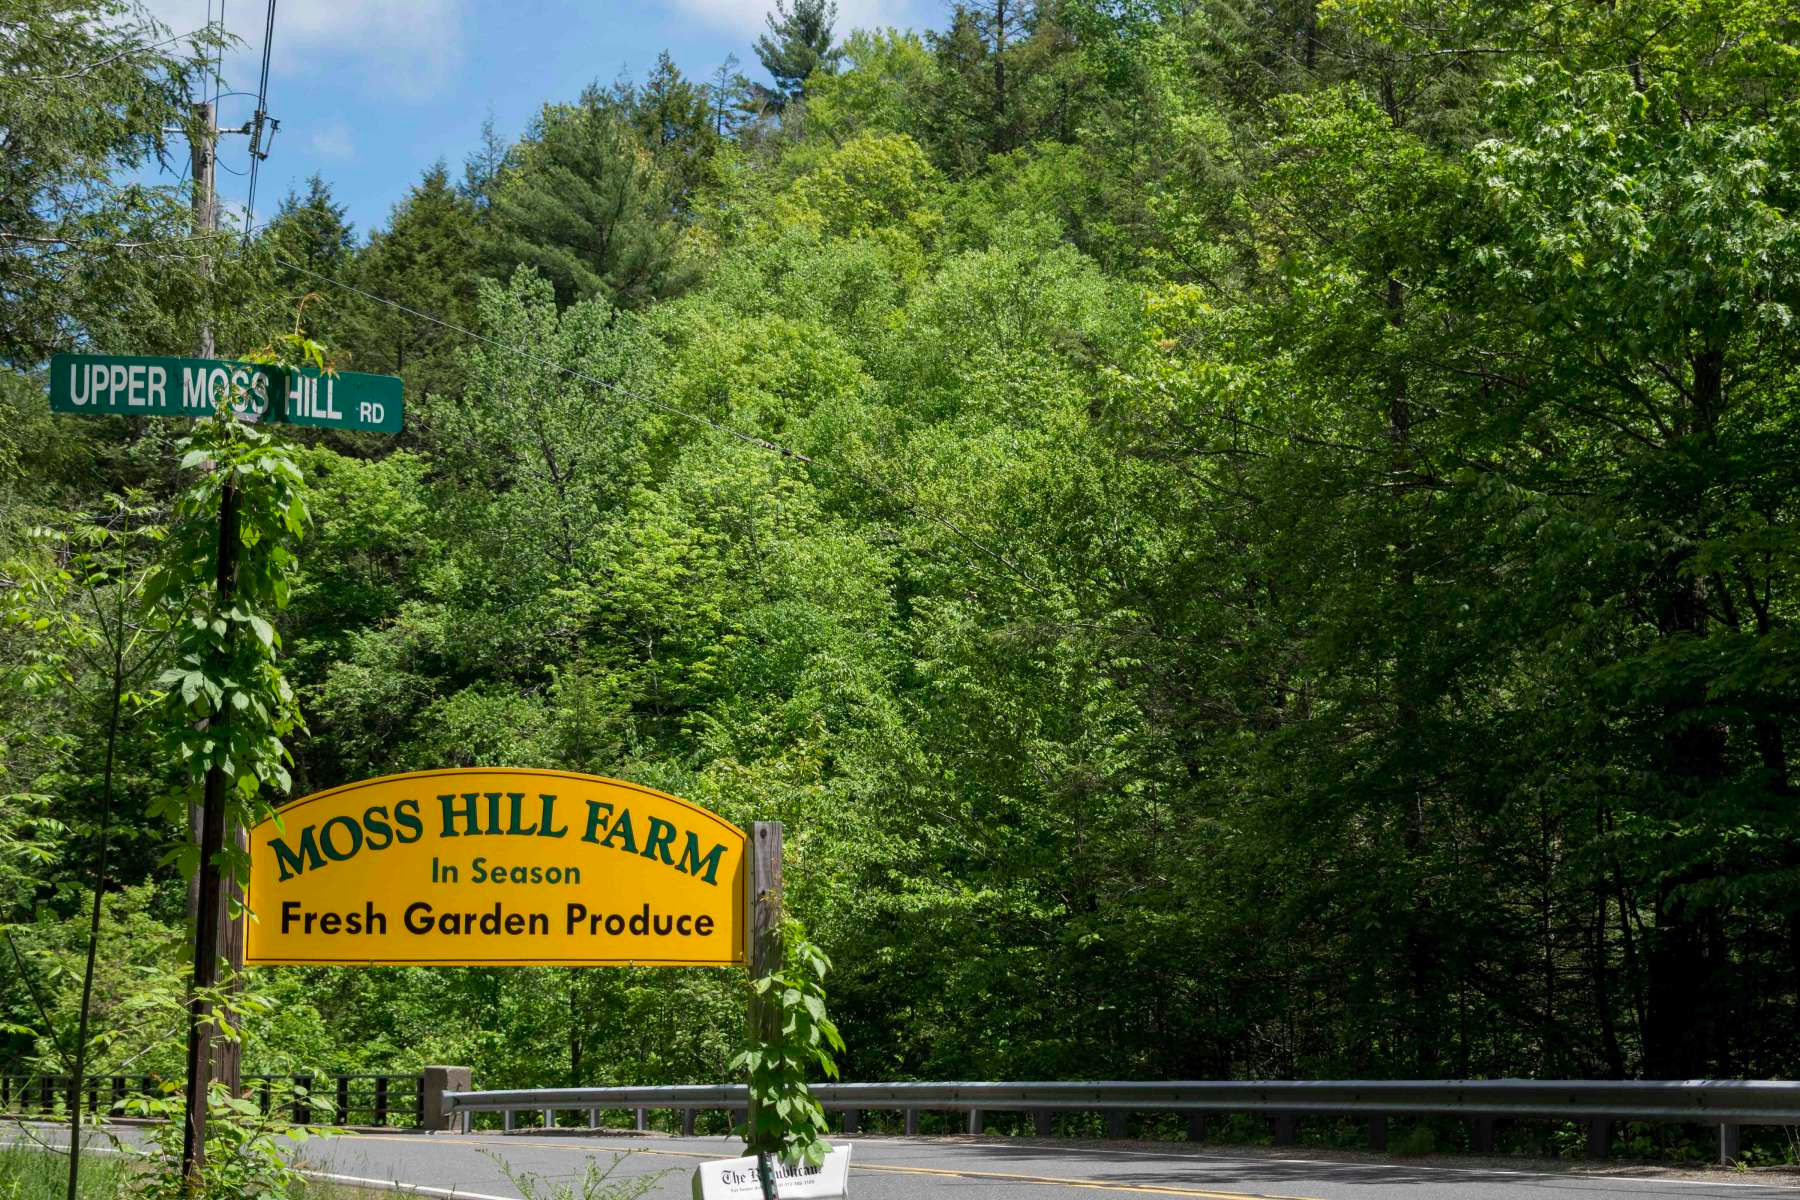 Moss Hill Farm, Moss Hill Farm, MA: 25 Hipcamper reviews and 18 photos